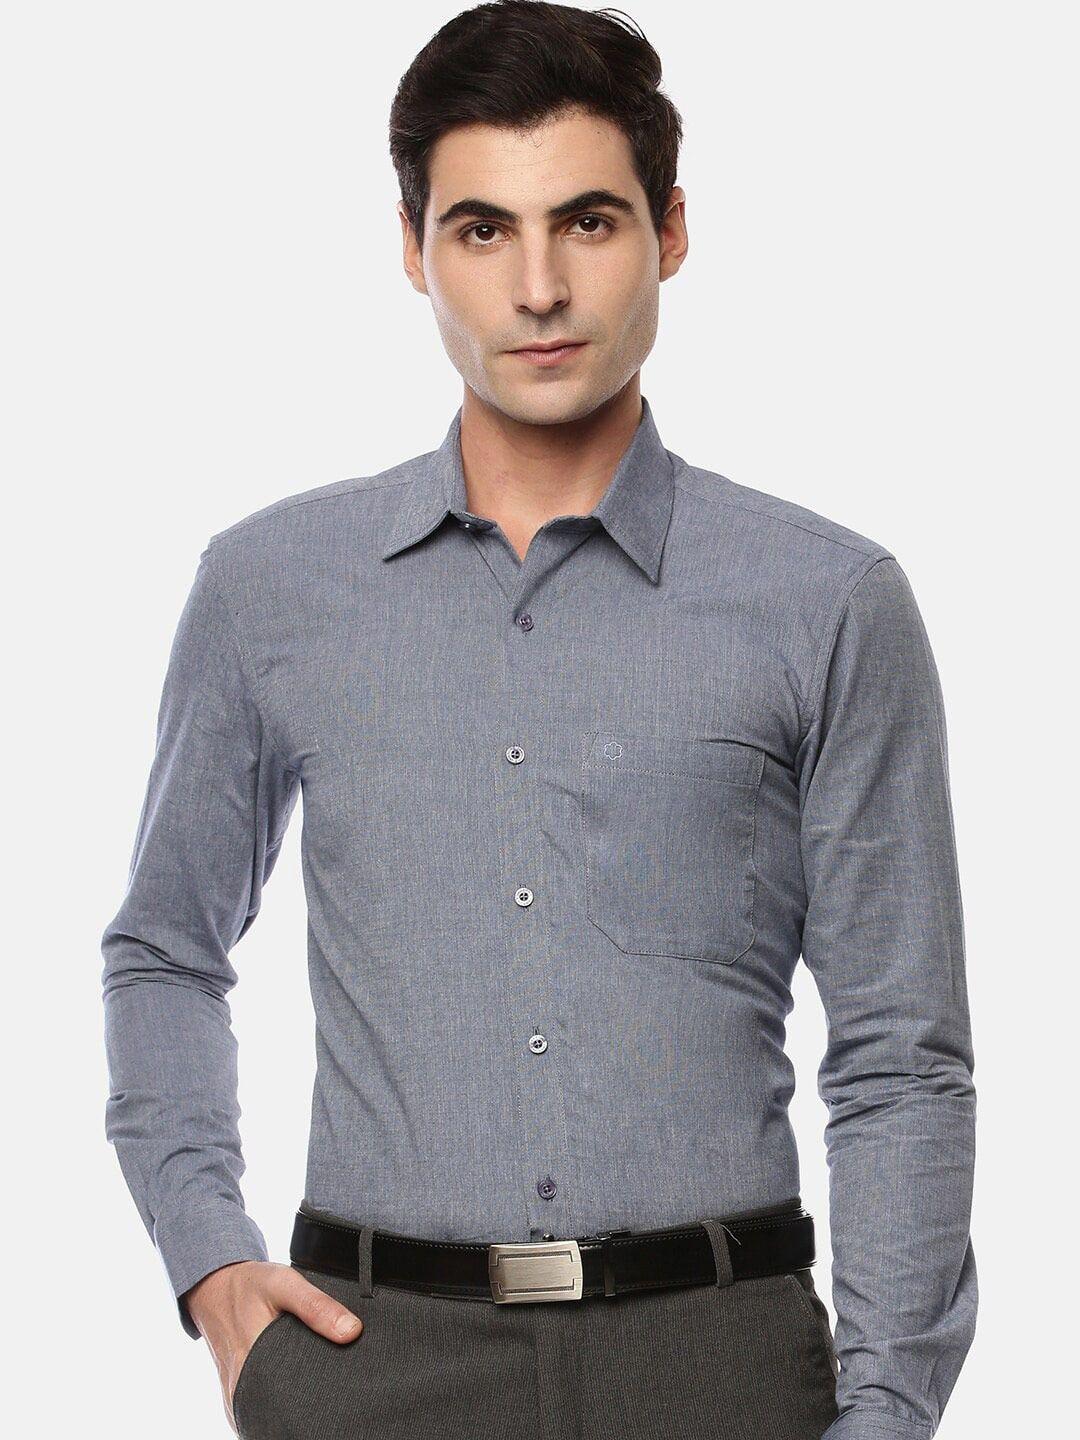 jansons-men-spread-collar-pure-cotton-formal-shirt